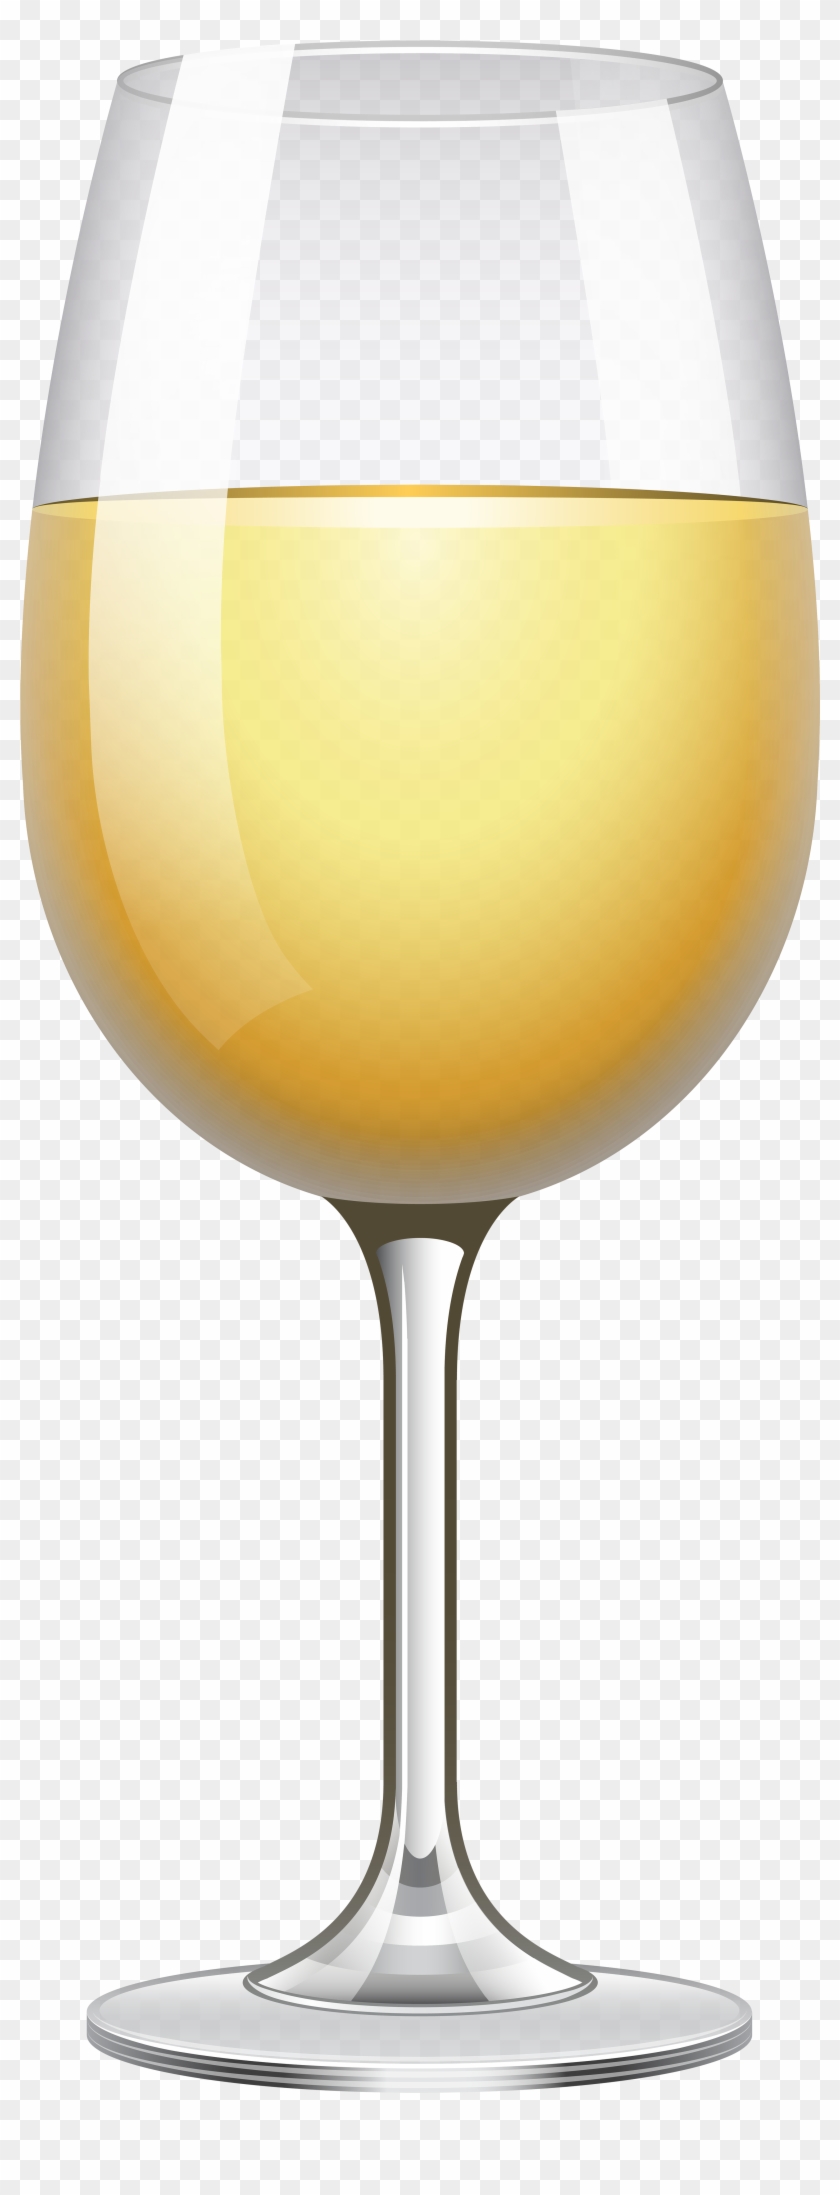 White Wine Glass Transparent Png Clip Art Image - Clip Art Wine Glasses #1090071